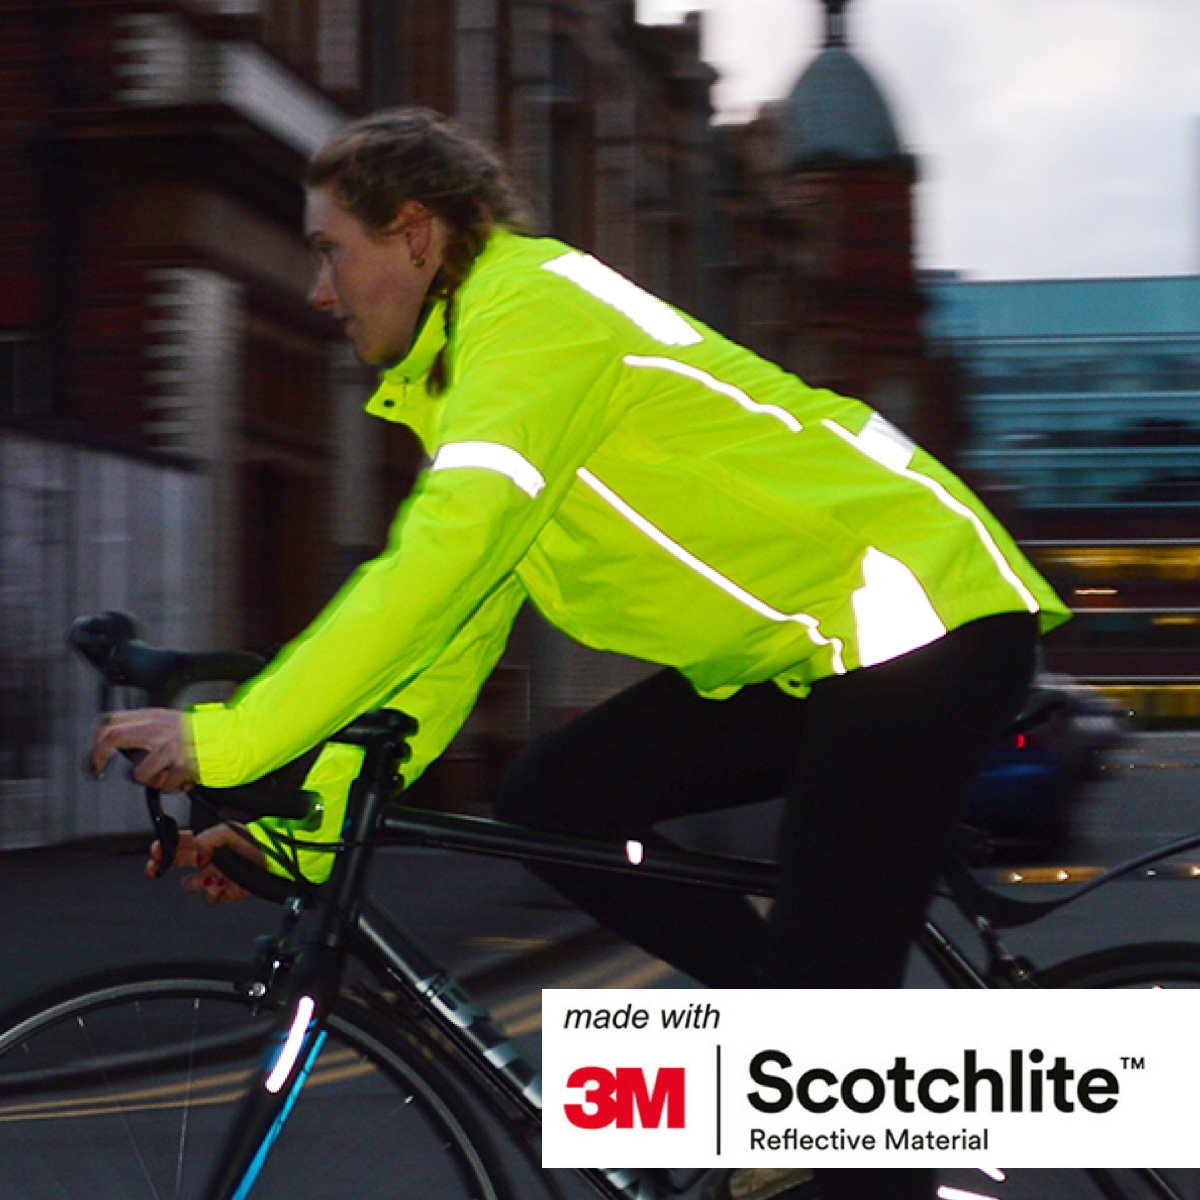 Woman cycling wearing a Yellow reflective jacket